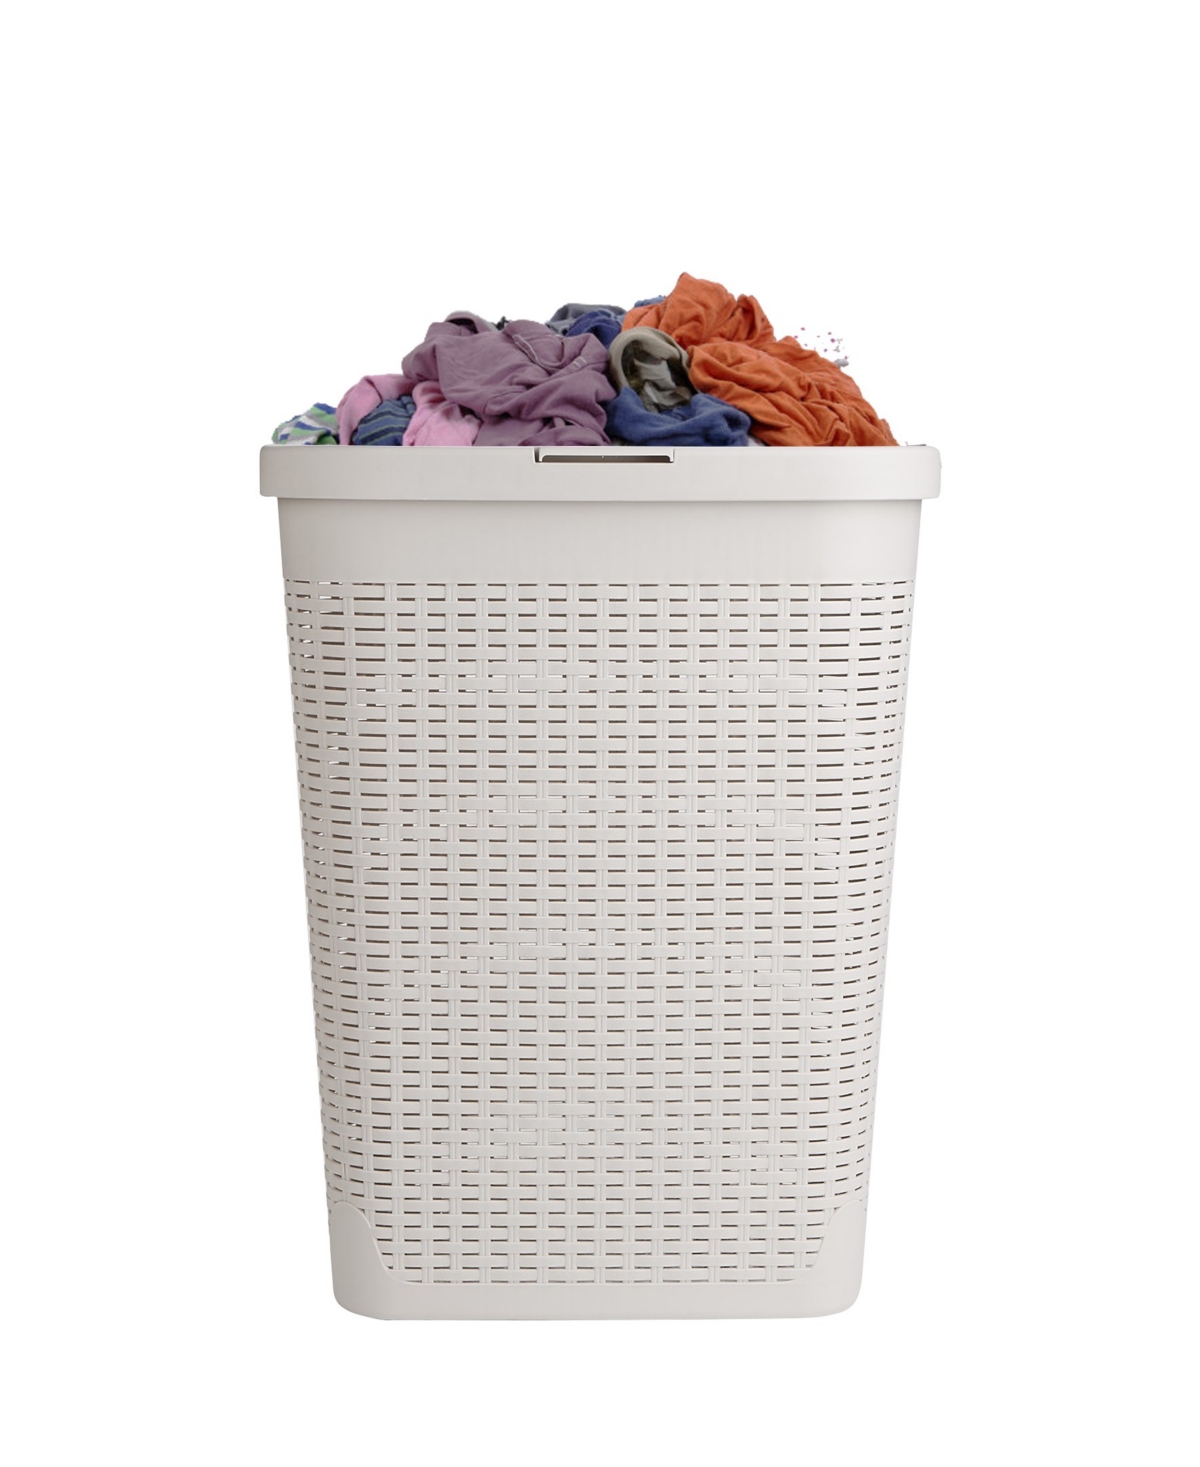 Slim Laundry Basket - Open White